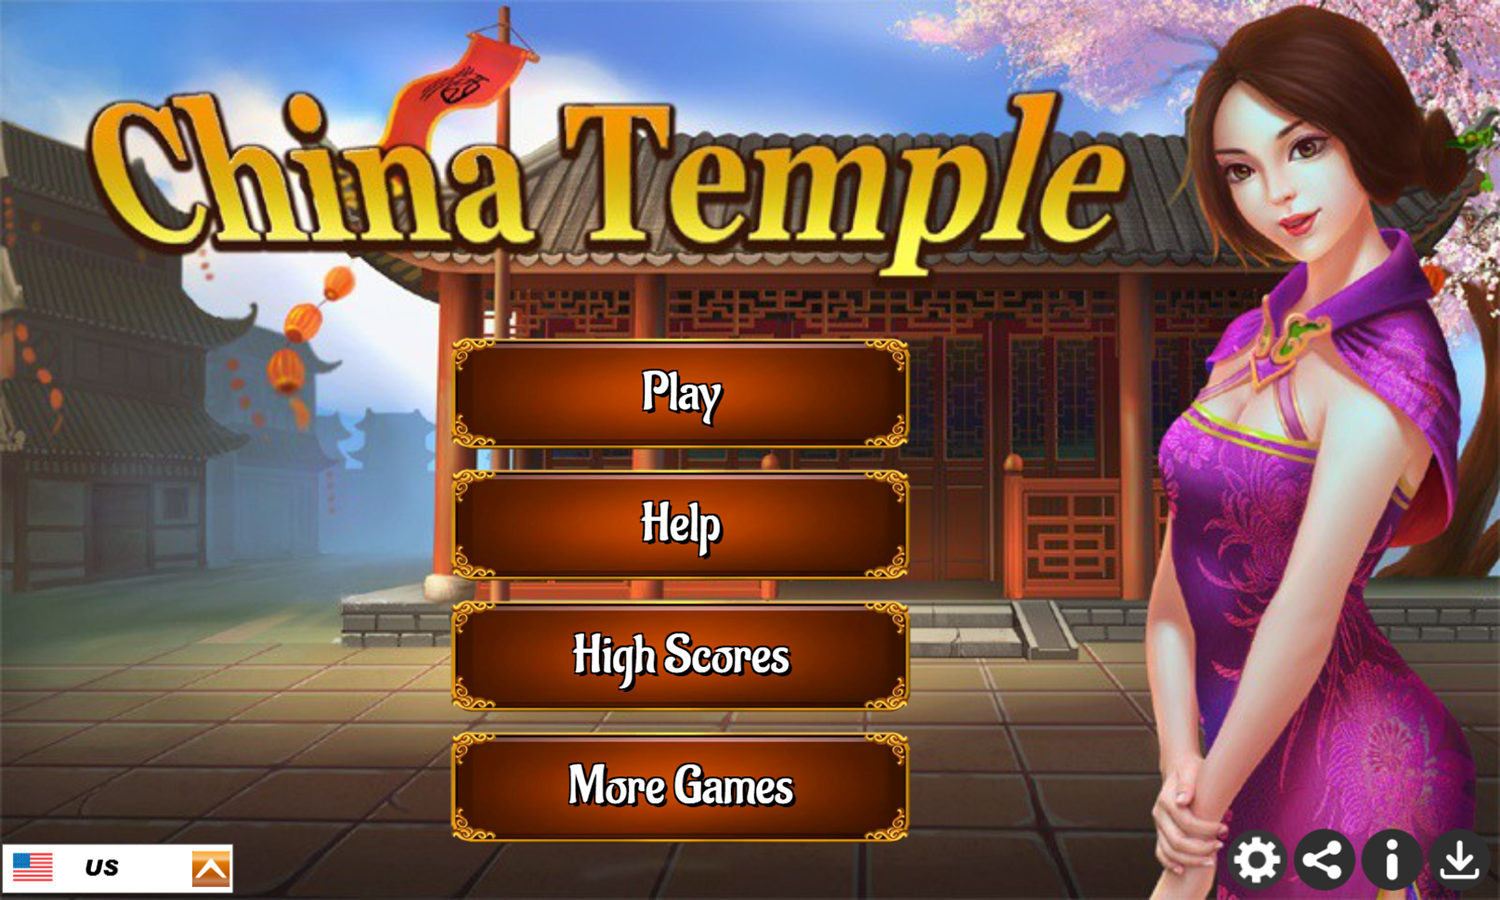 China Temple Game Welcome Screen Screenshot.